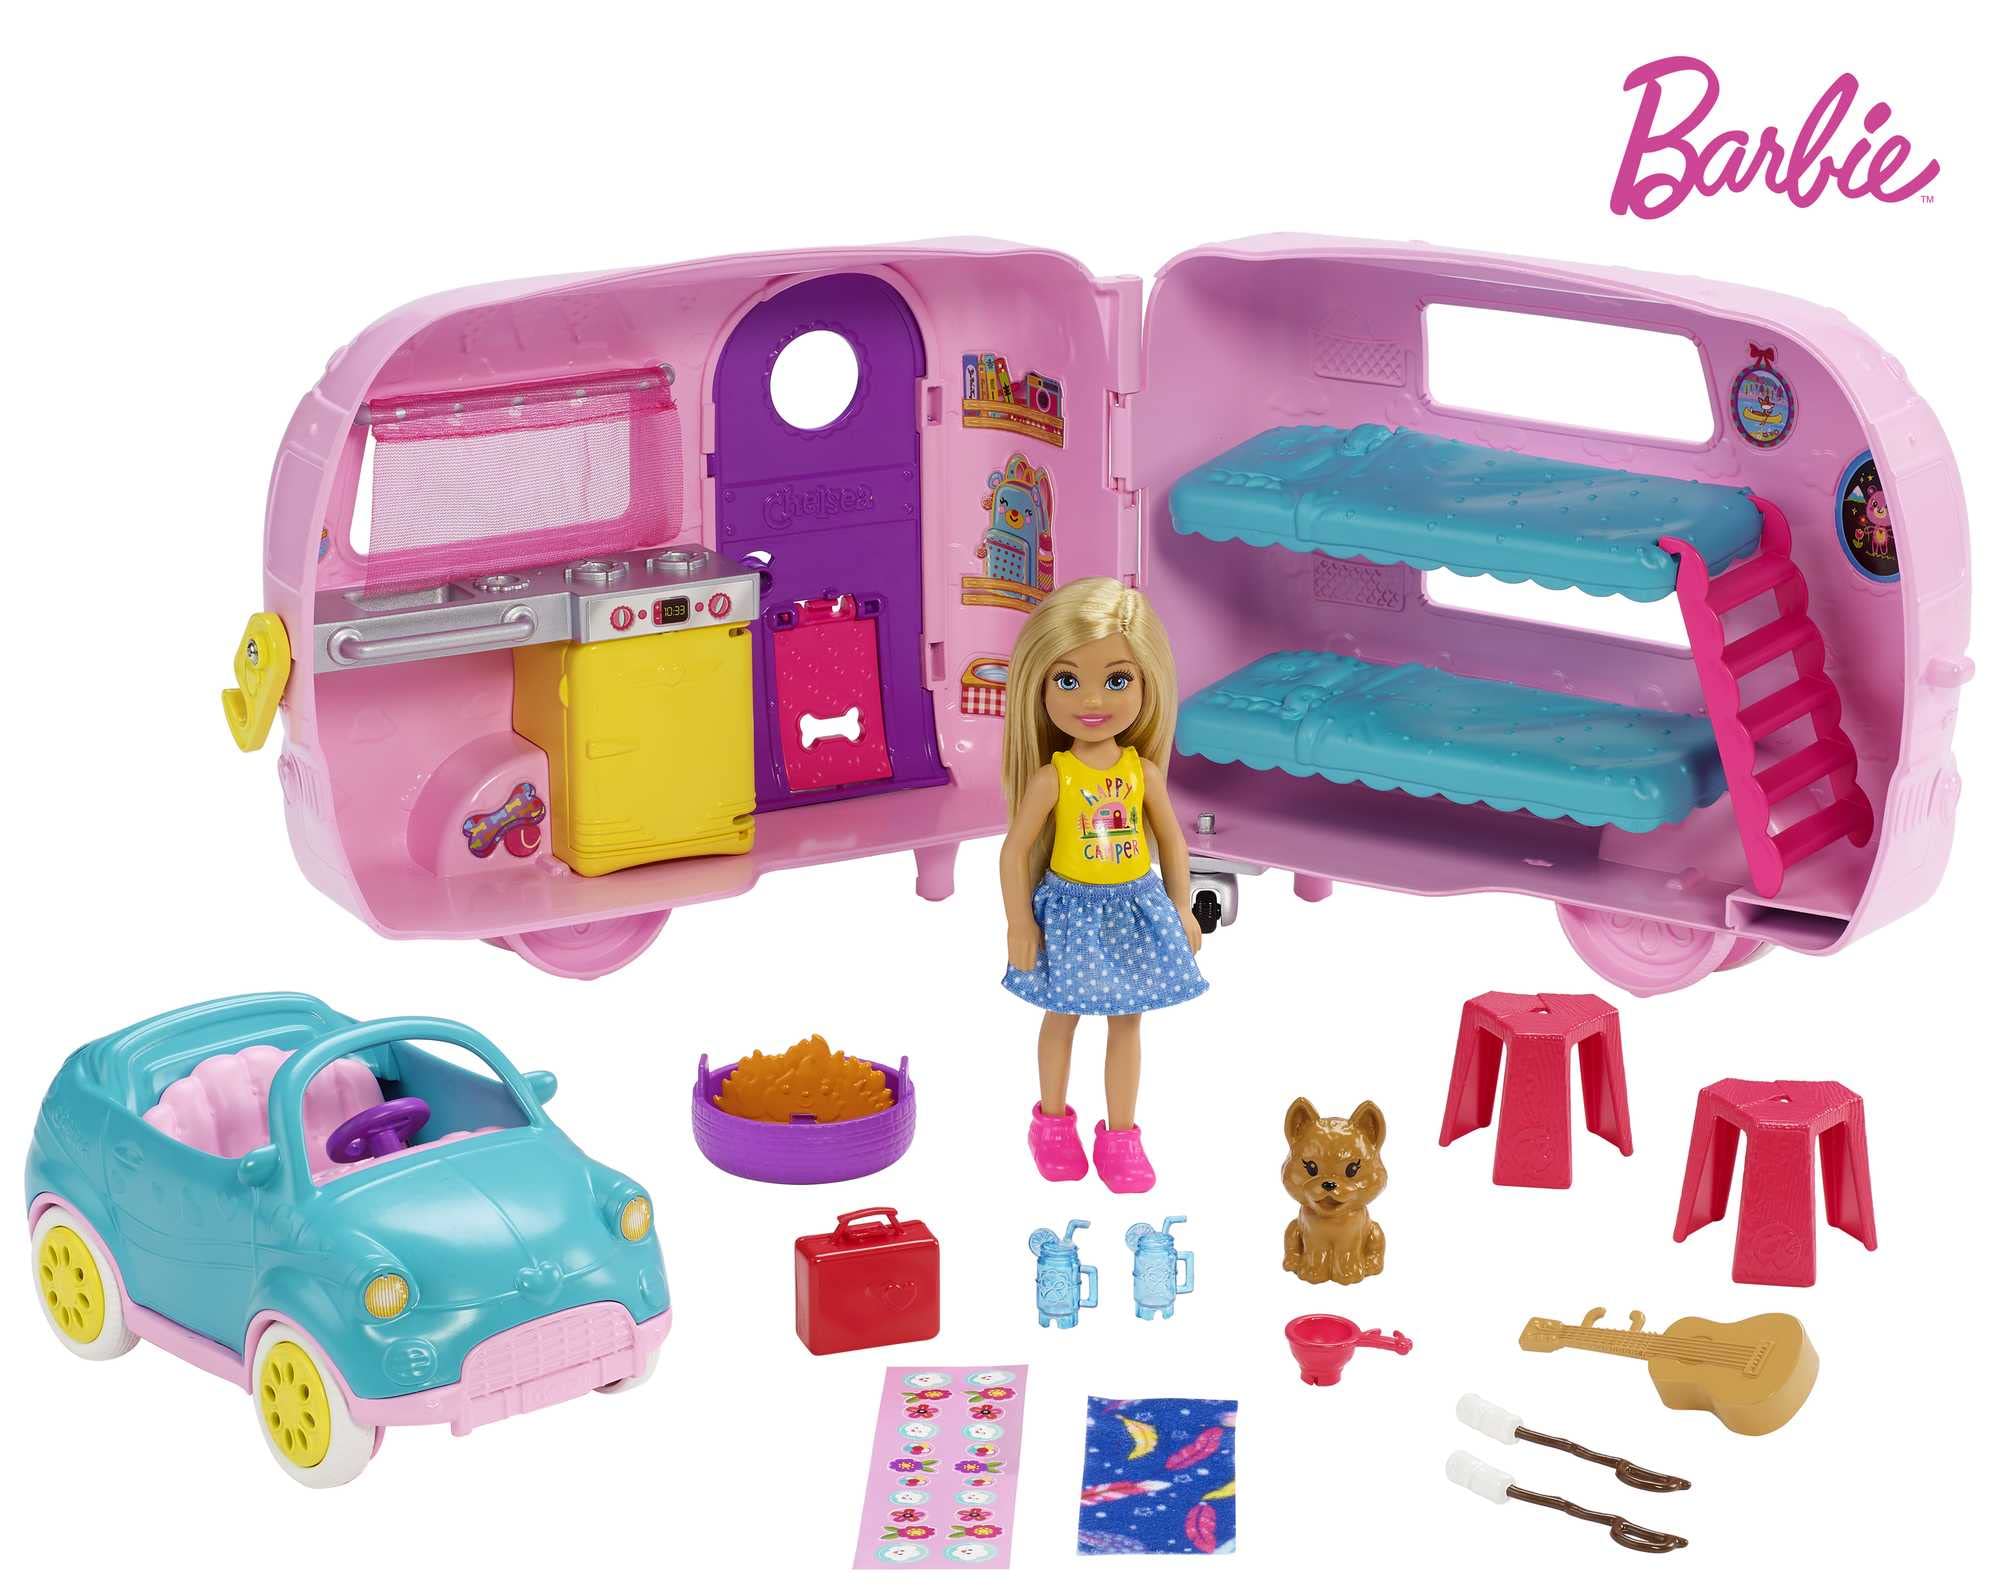 Barbie Club Chelsea Camper + 10 accesorios